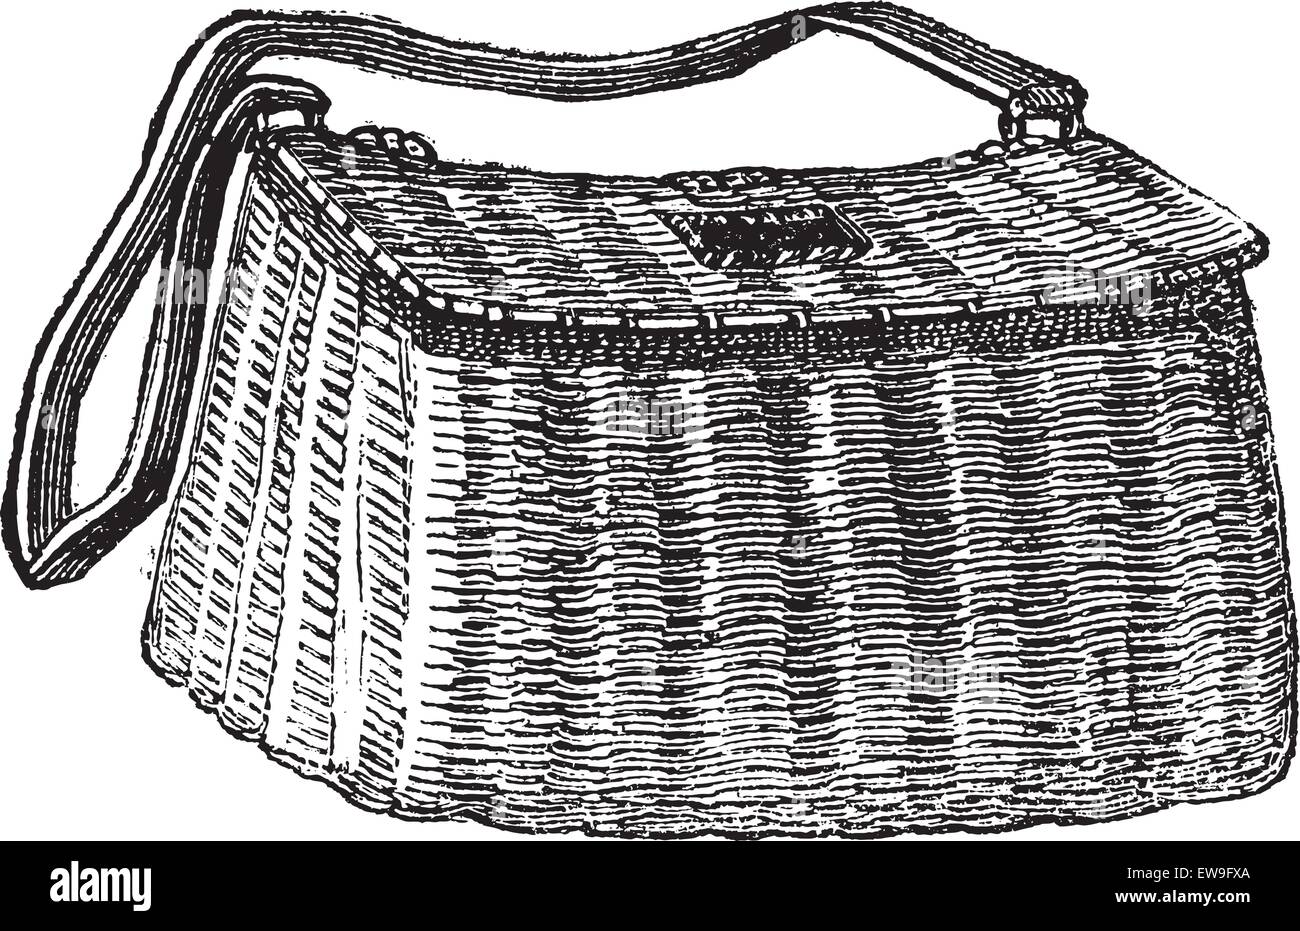 https://c8.alamy.com/comp/EW9FXA/fishermans-basket-used-in-fly-fishing-vintage-engraved-illustration-EW9FXA.jpg